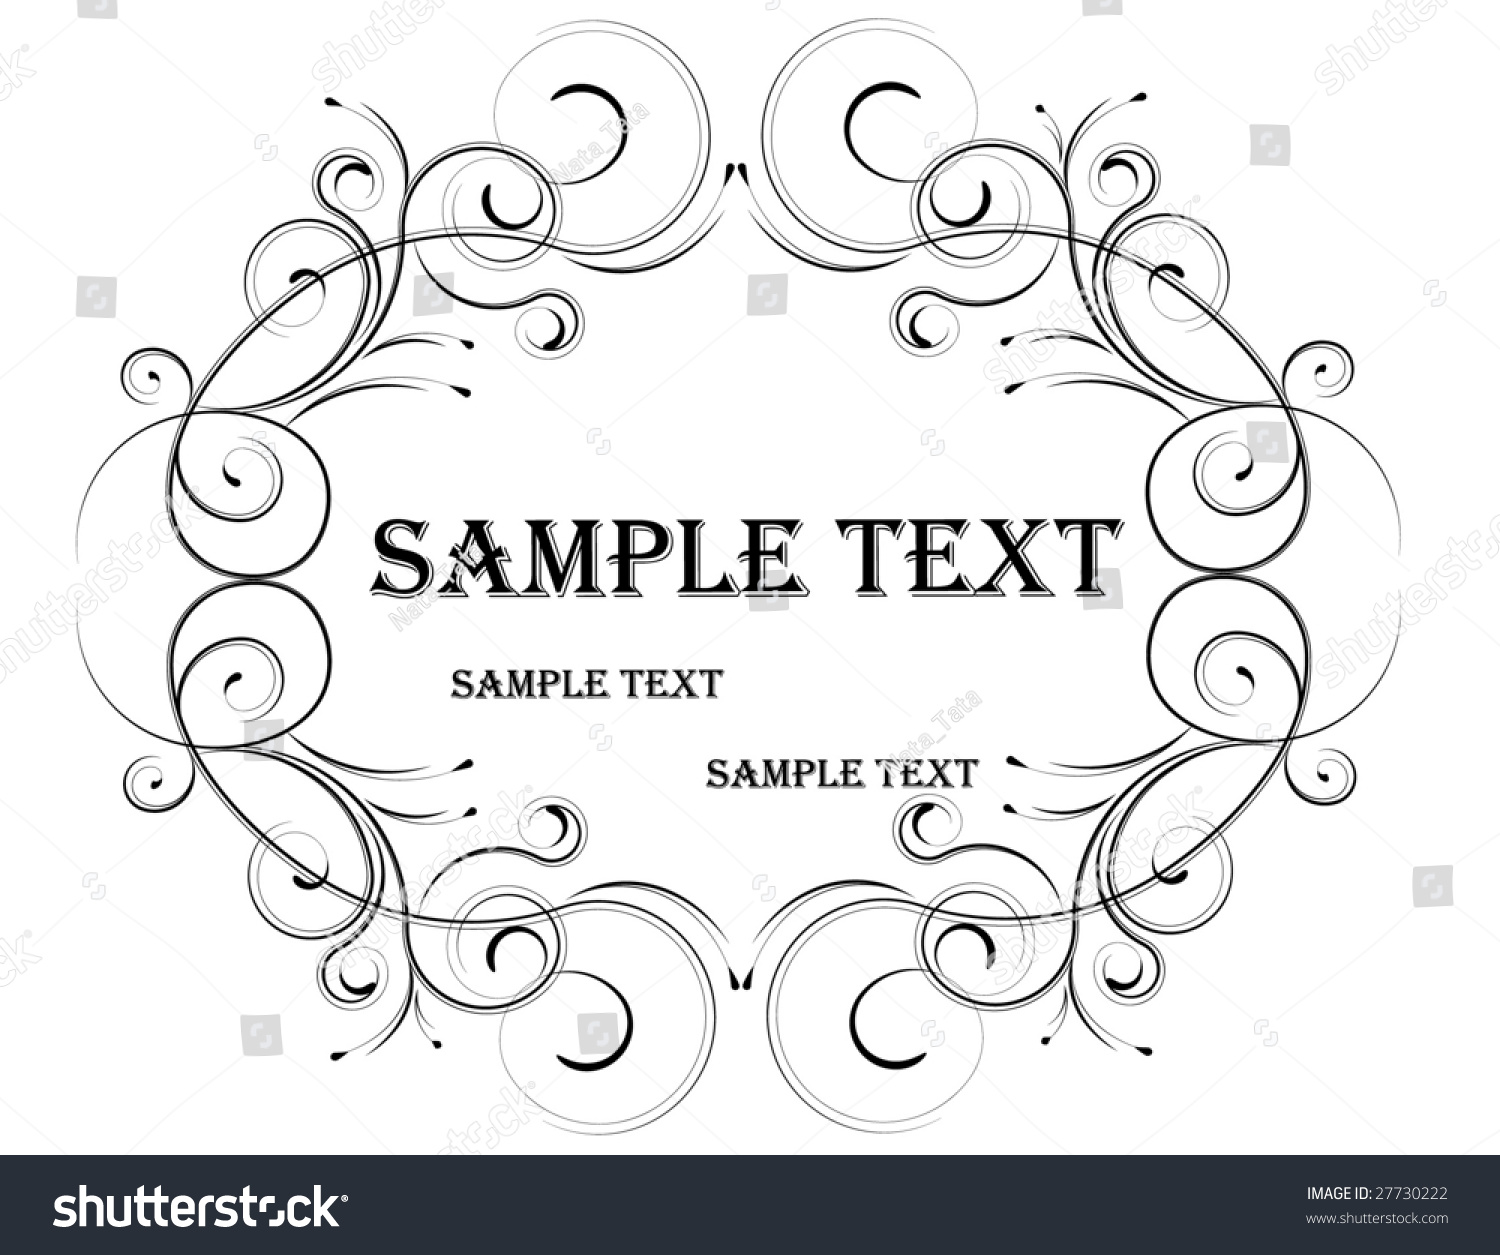 Sample Text Stock Vector Illustration 27730222 : Shutterstock